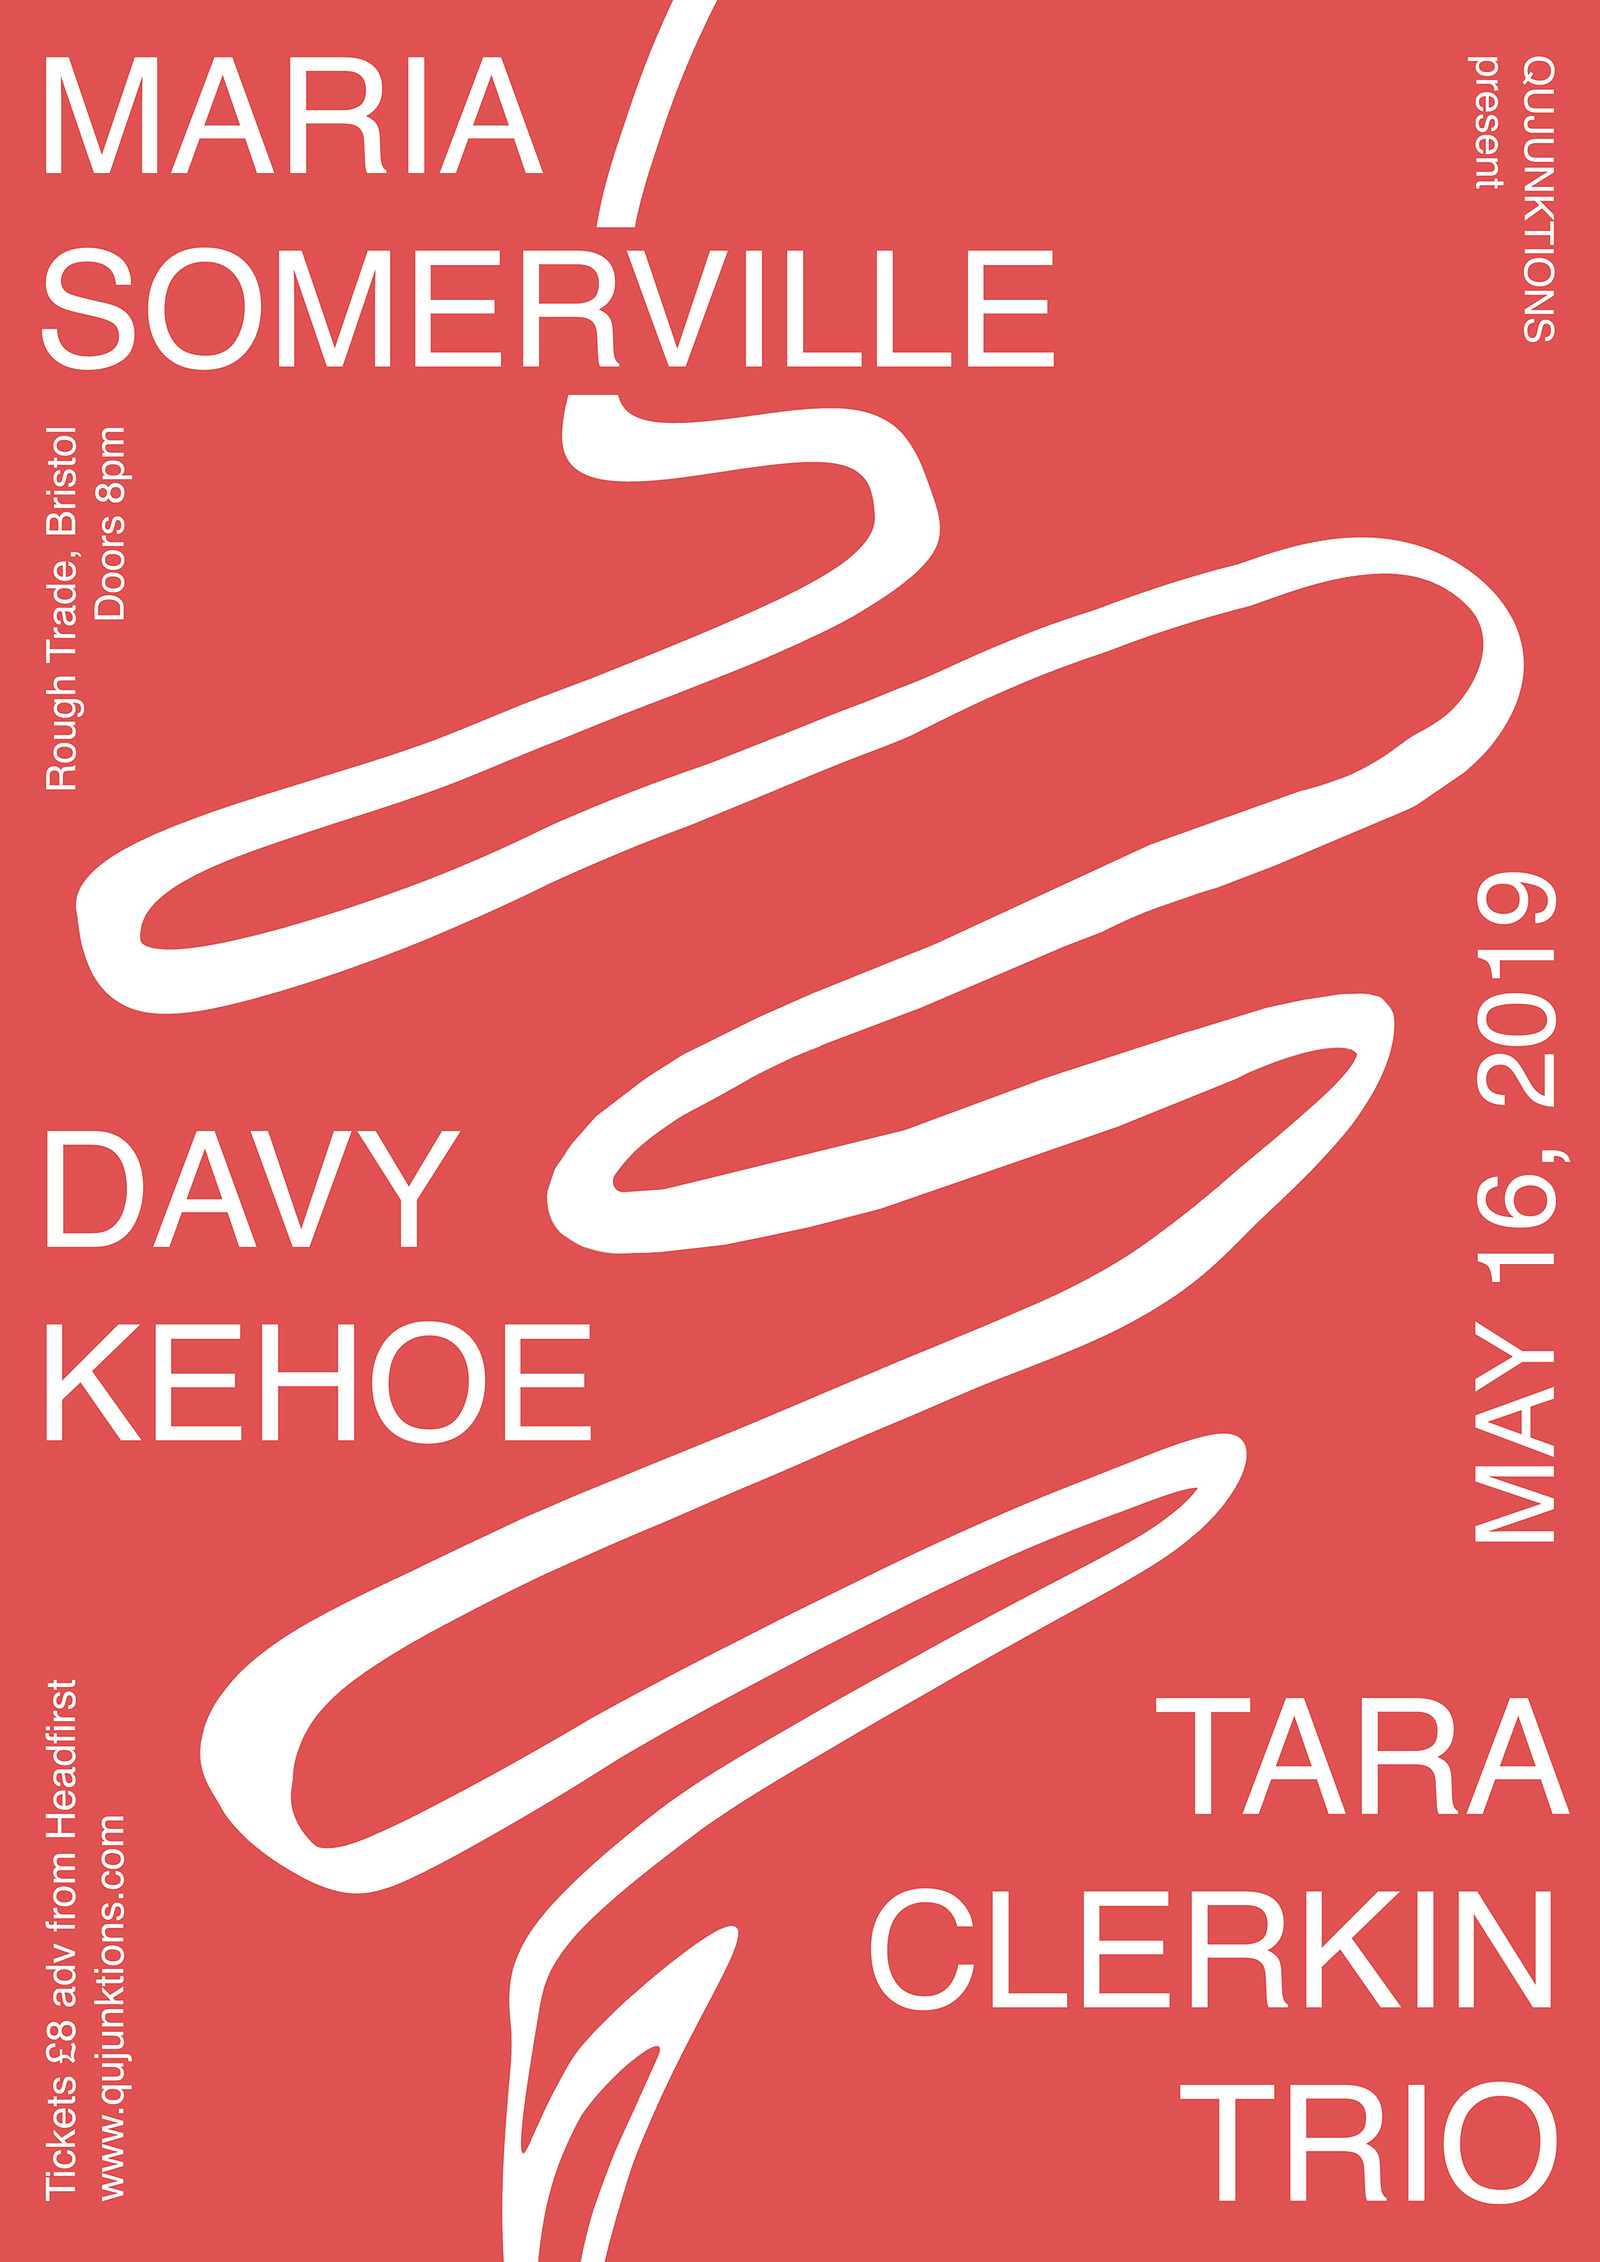 MARIA SOMERVILLE + DAVY KEHOE + TARA CLERKIN TRIO at Rough Trade Bristol